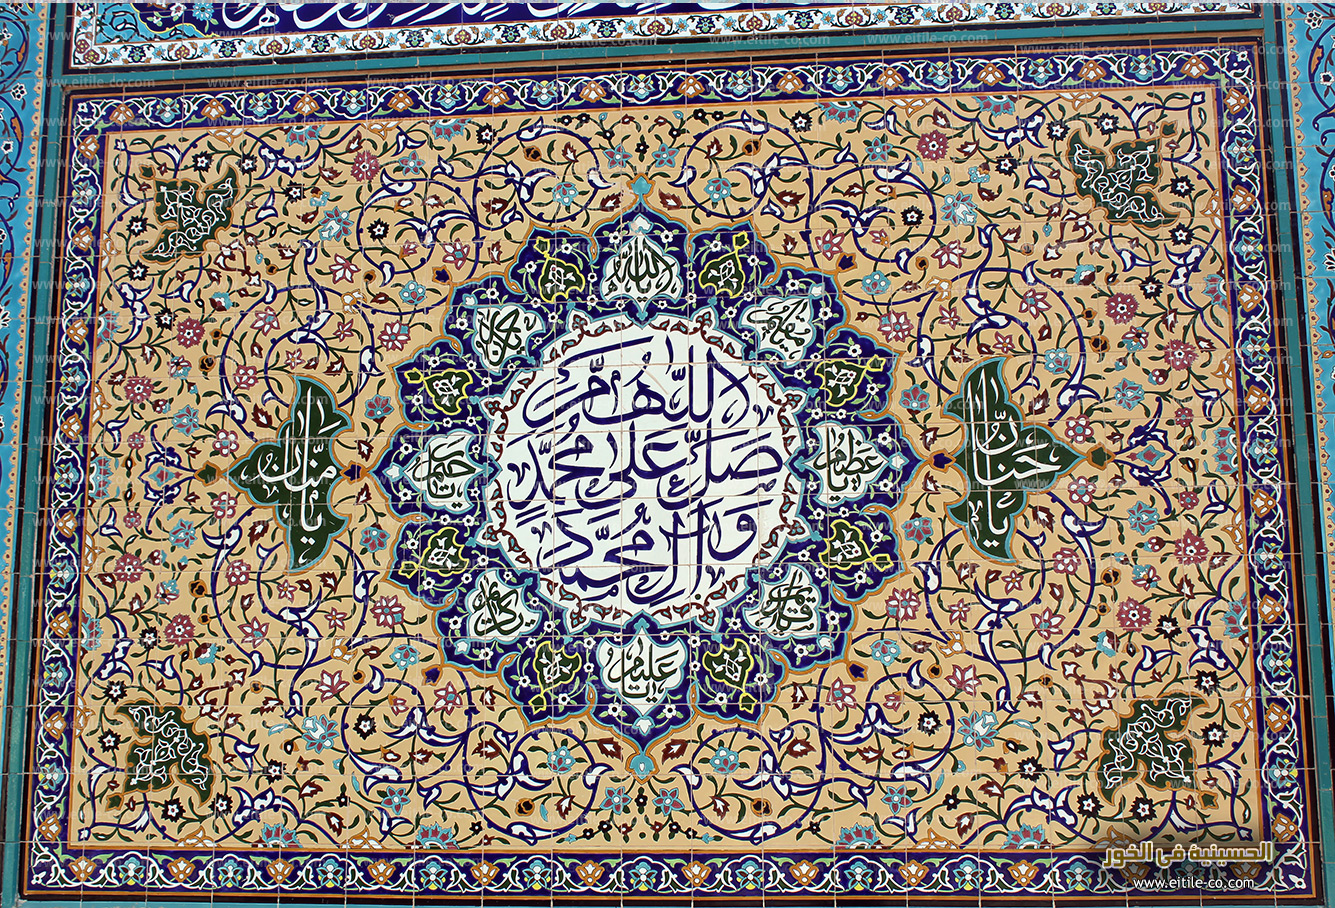 Iranian mosque tile supplier, www.eitile-co.com